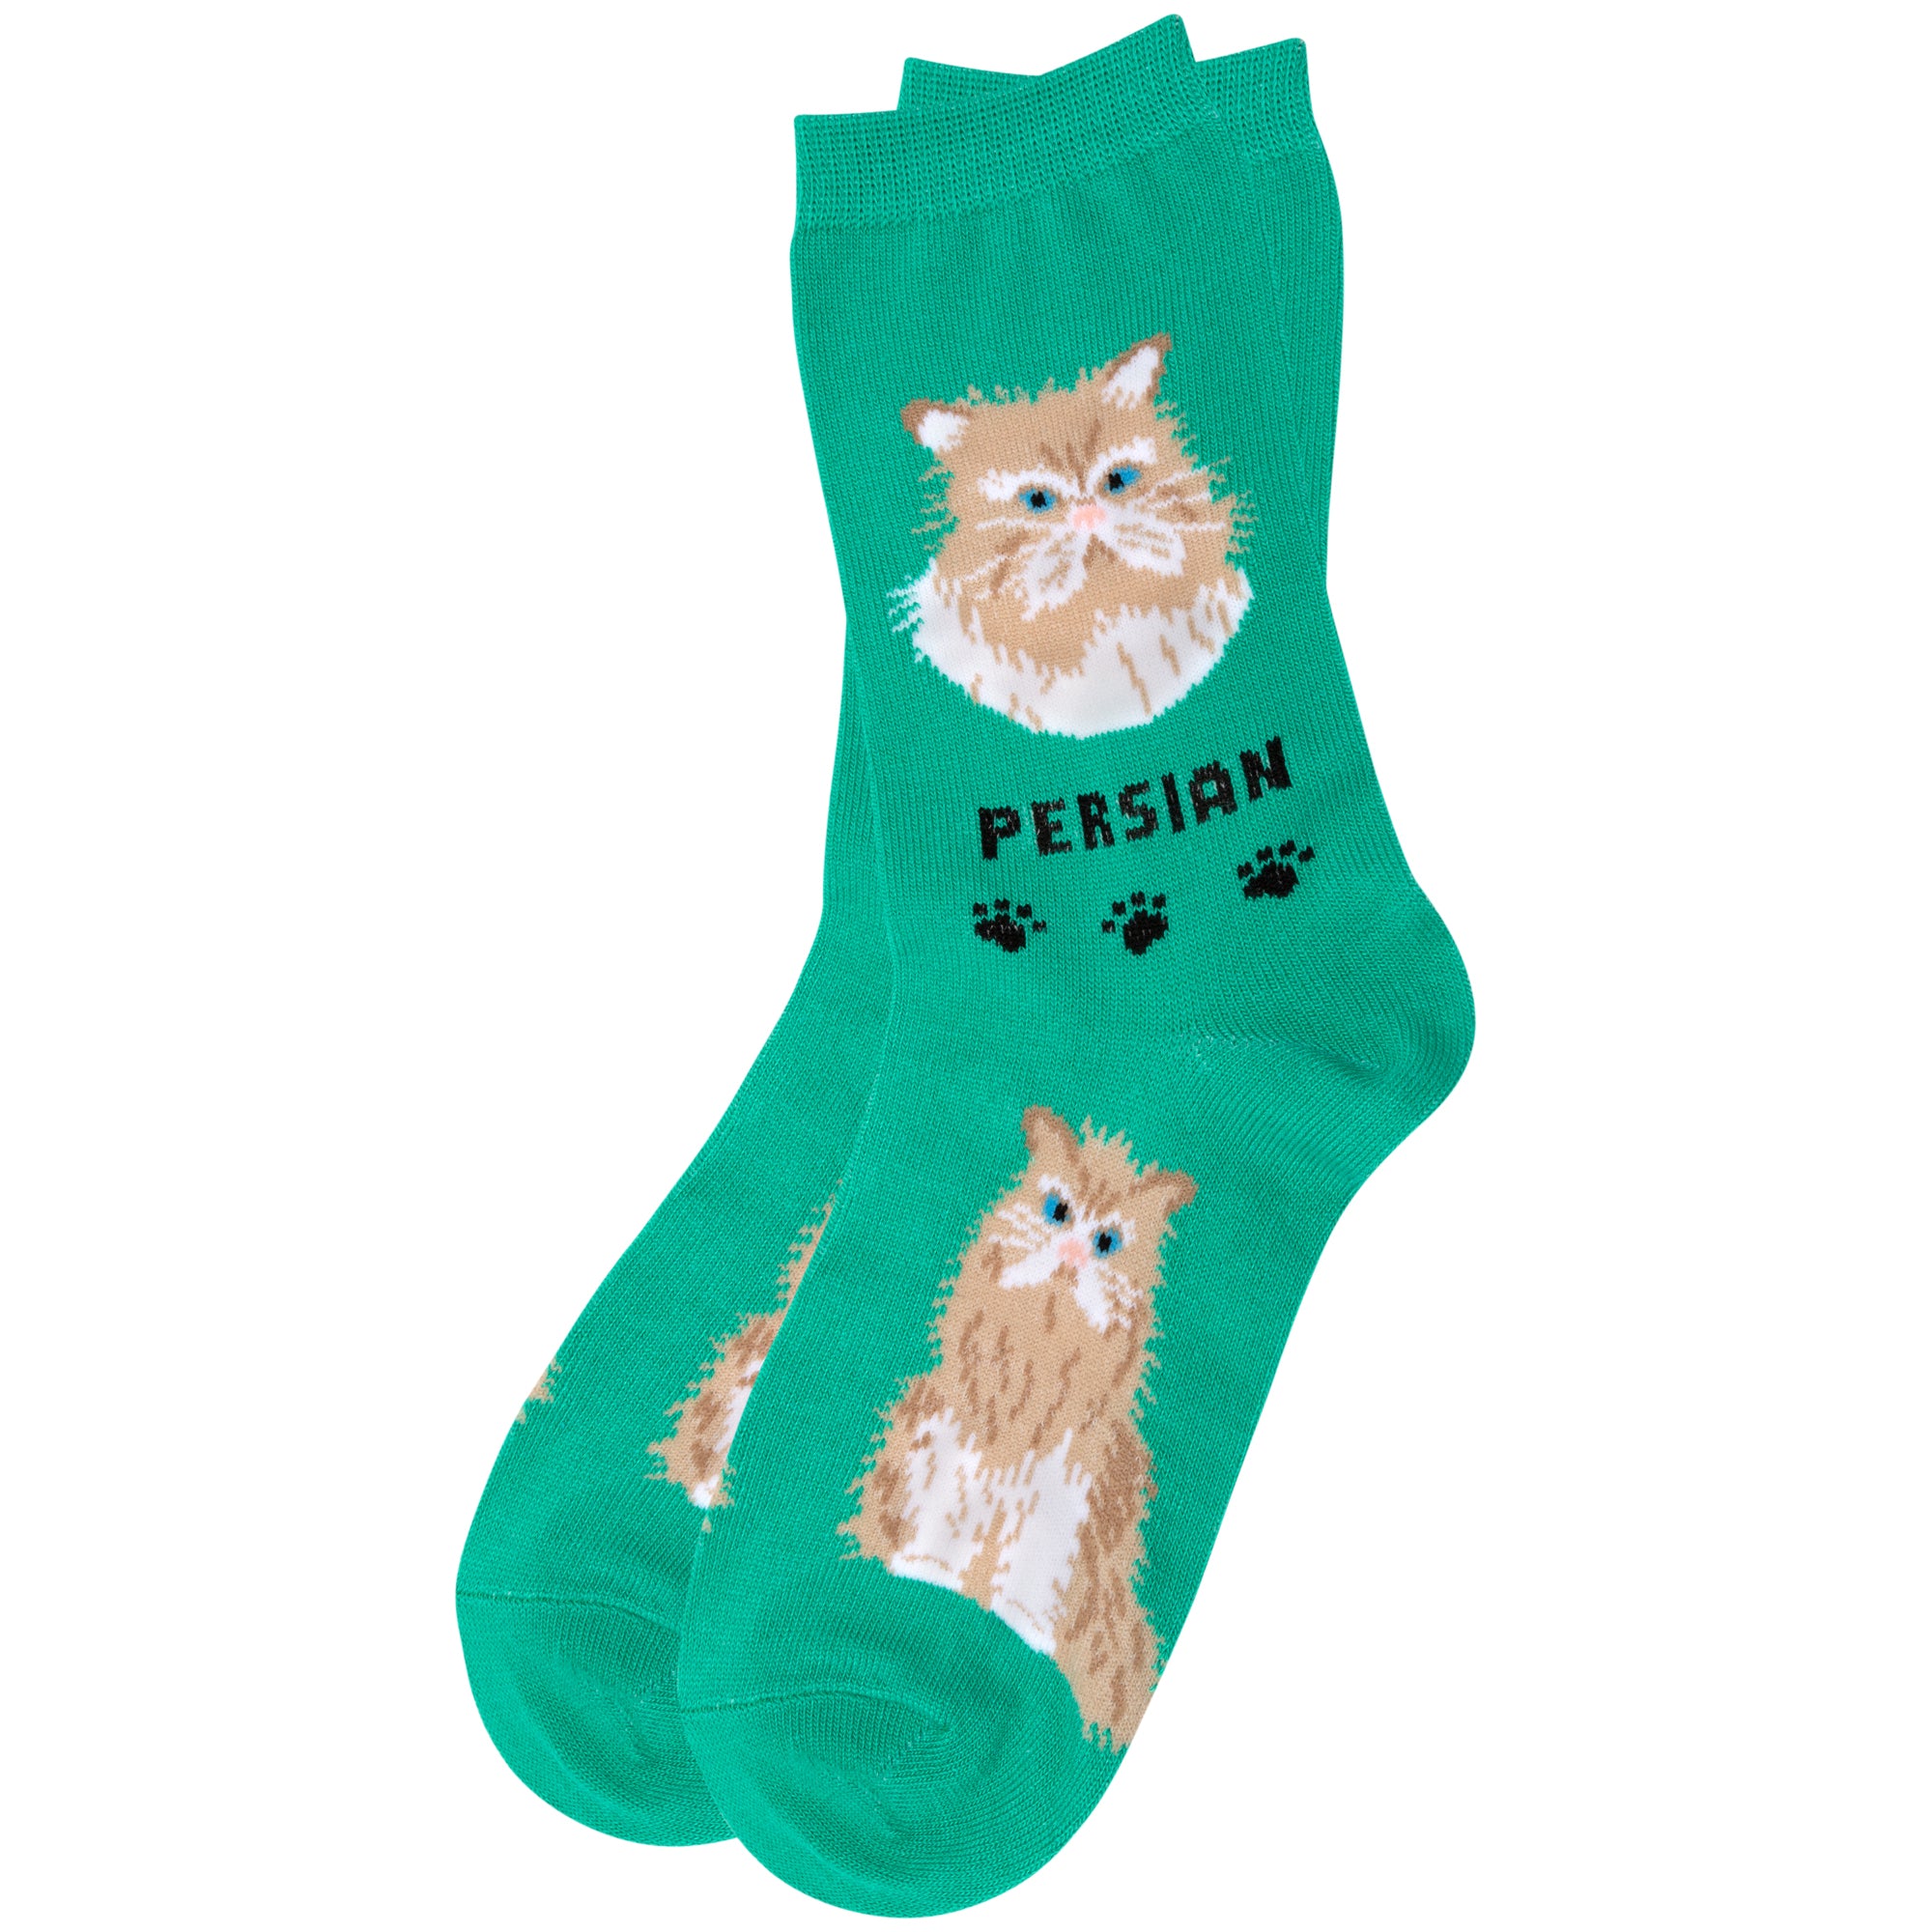 Loving All My Cats Socks - Scottish Fold - Pink